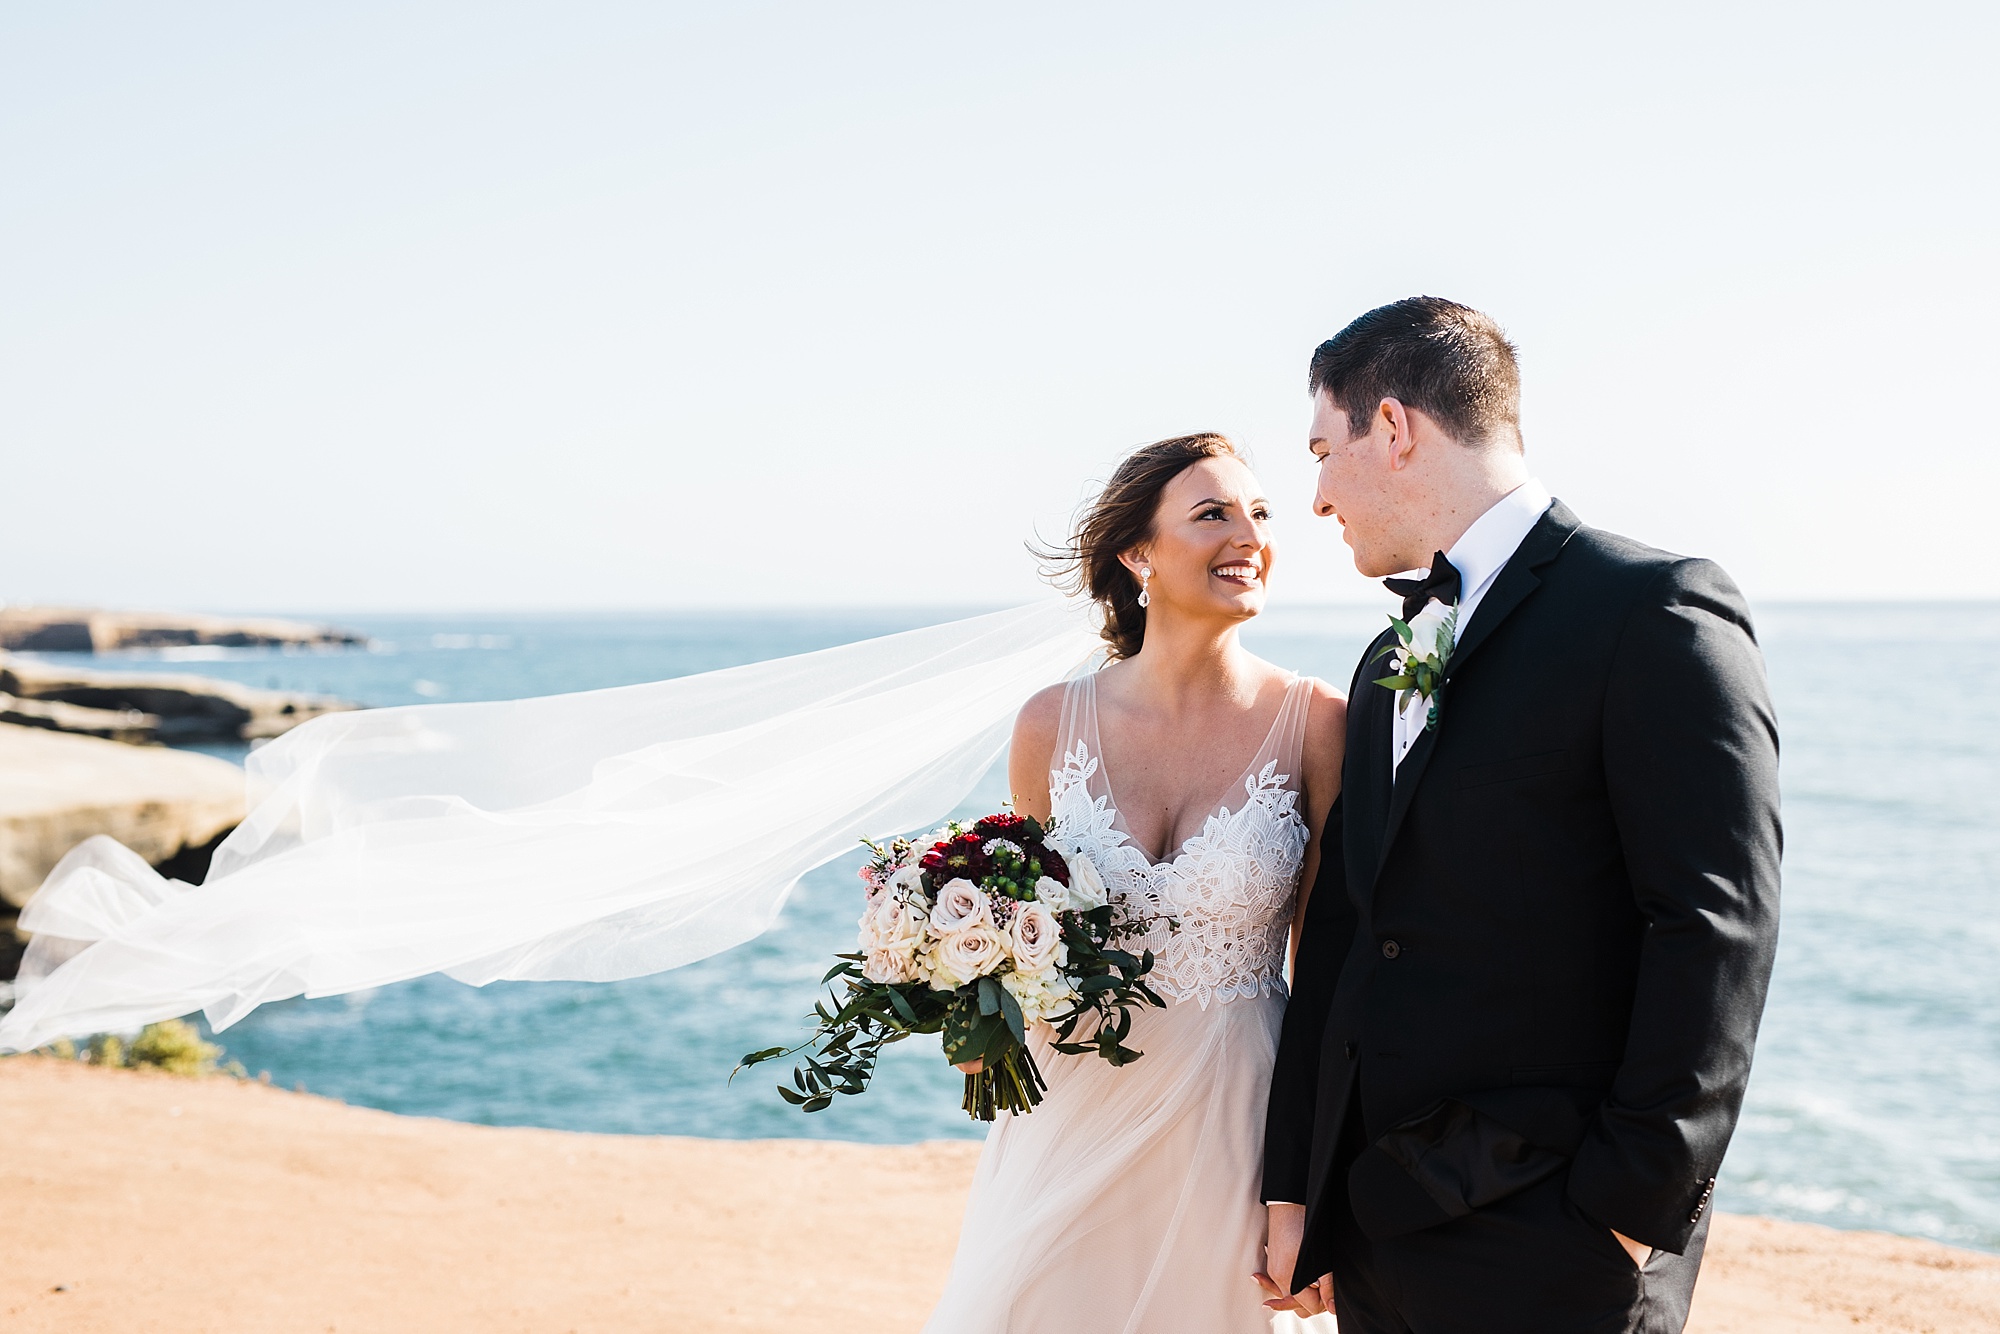 haley and luke wedding sunset cliffs san diego california elopement wedding hazel and lace photography